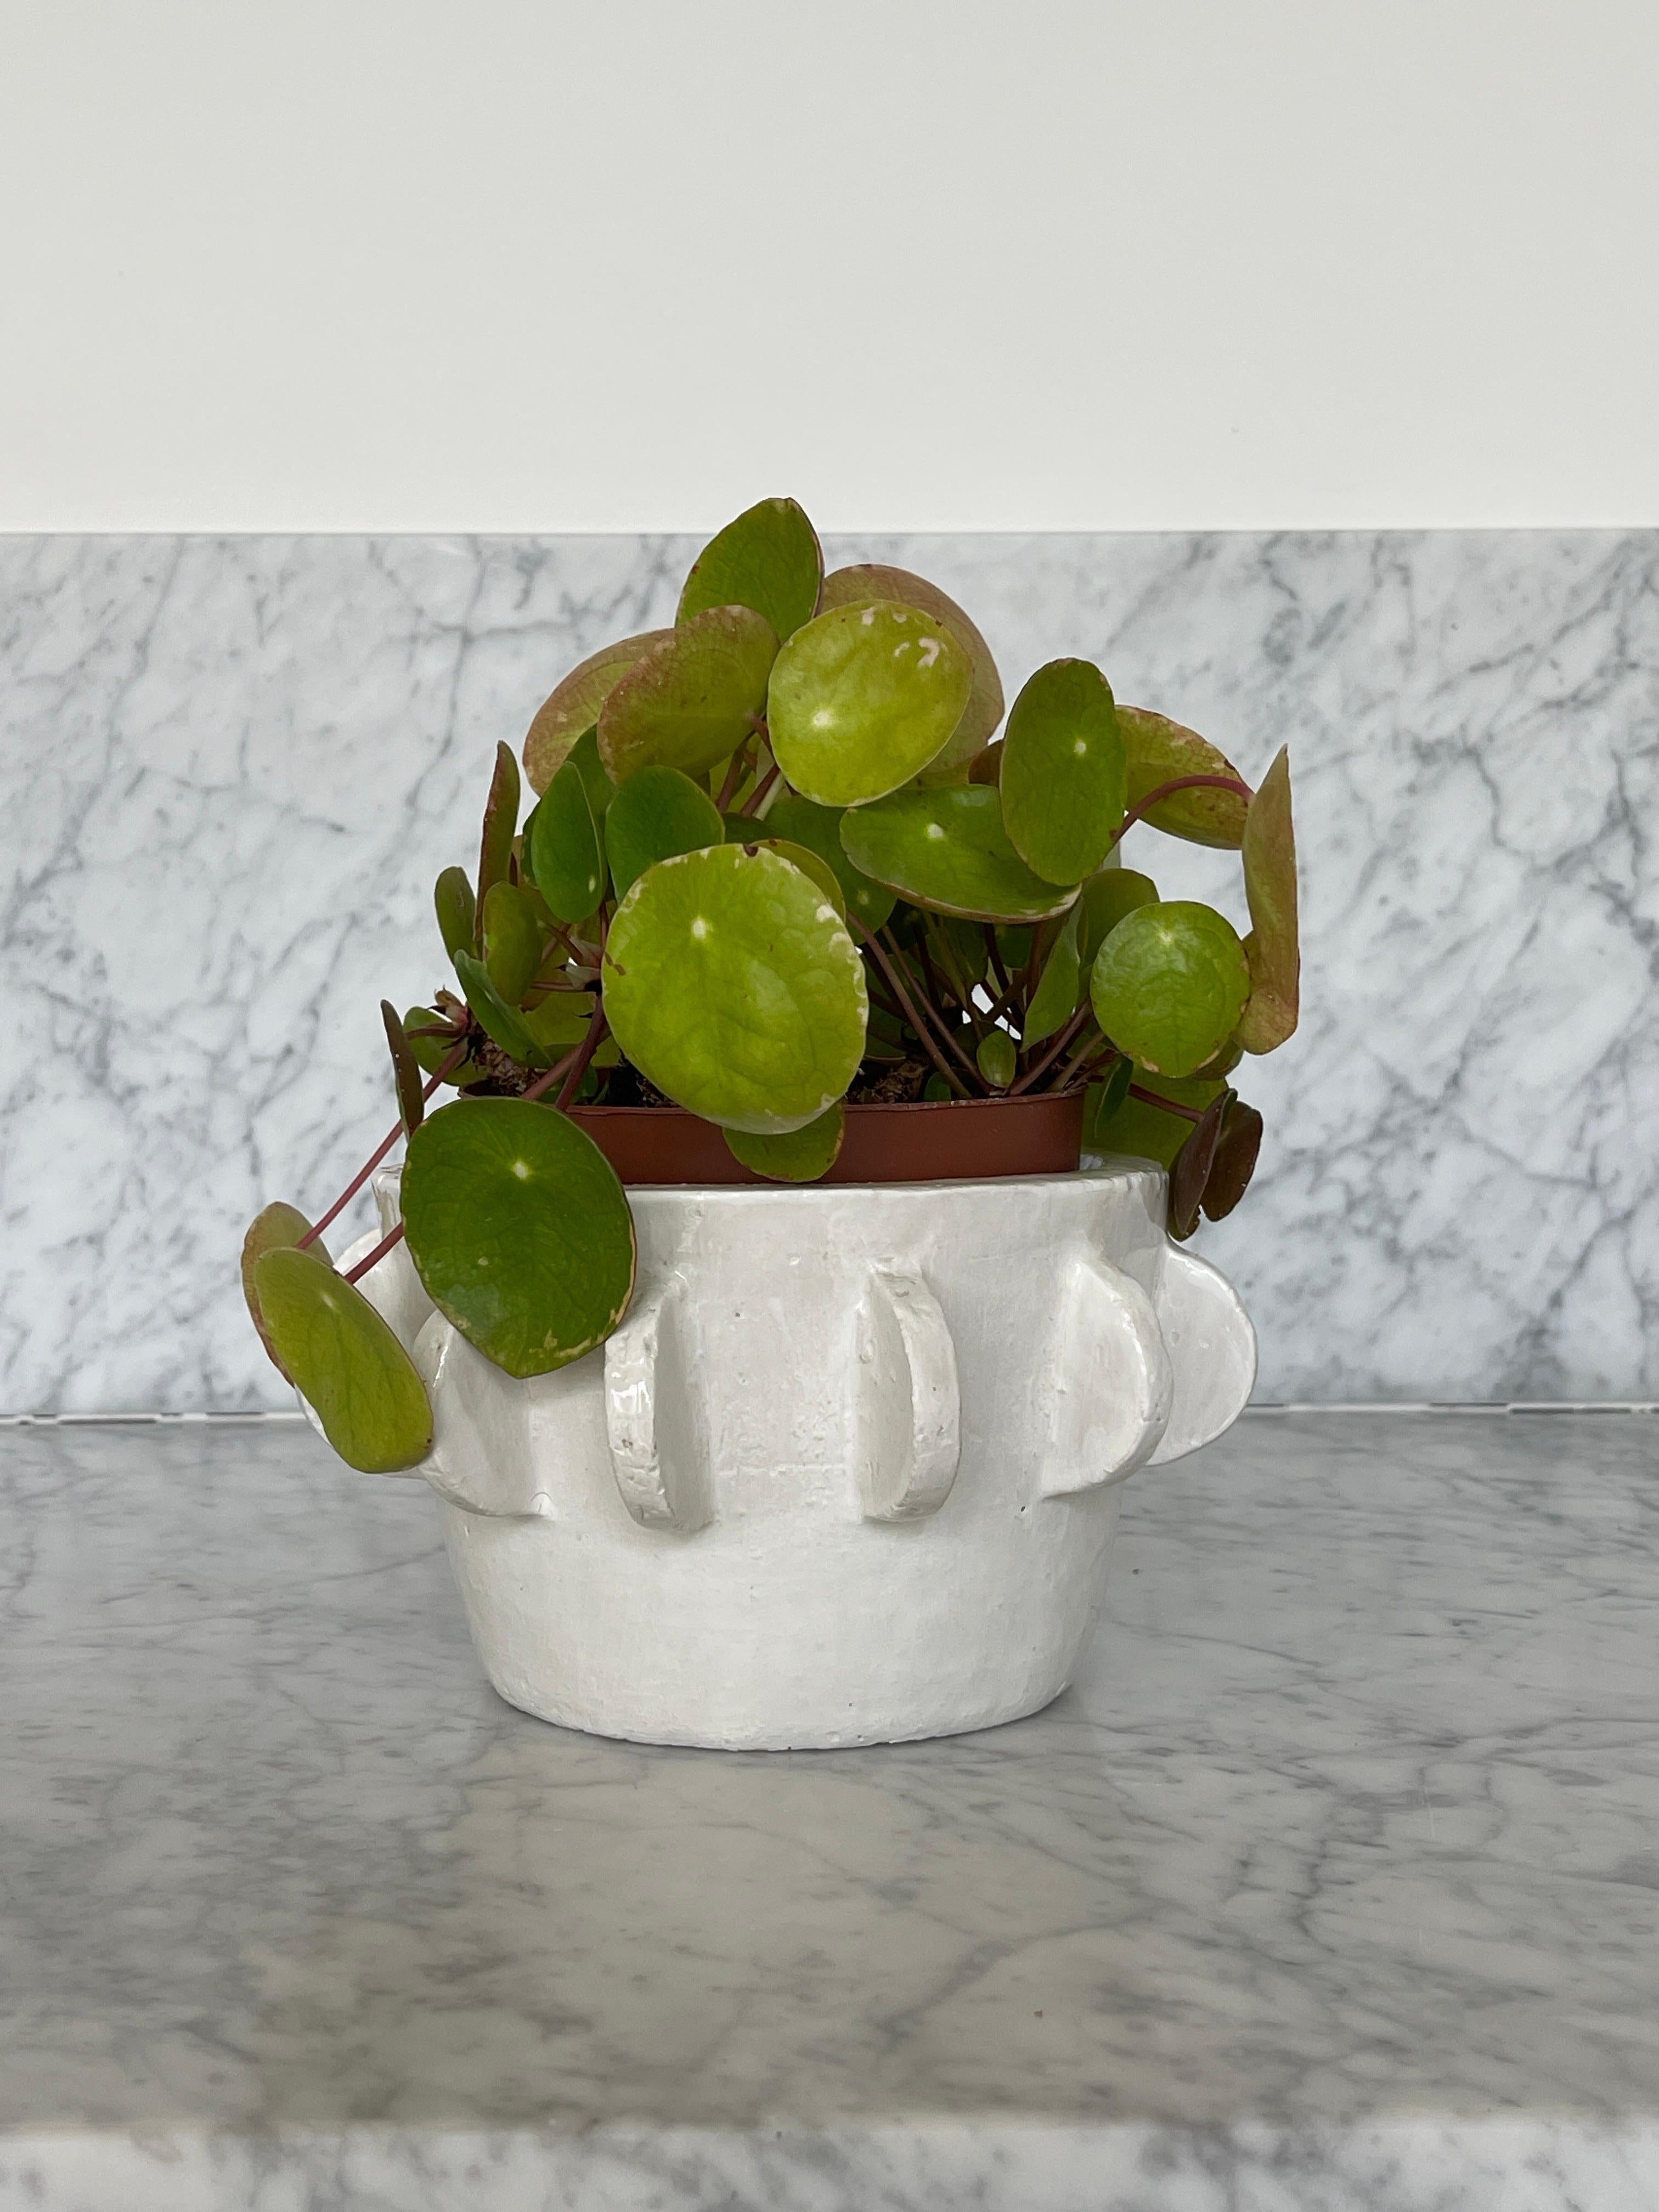 Handmade ceramic vessel or plant pot by Chilean Belgian artist Mariela Ceramica